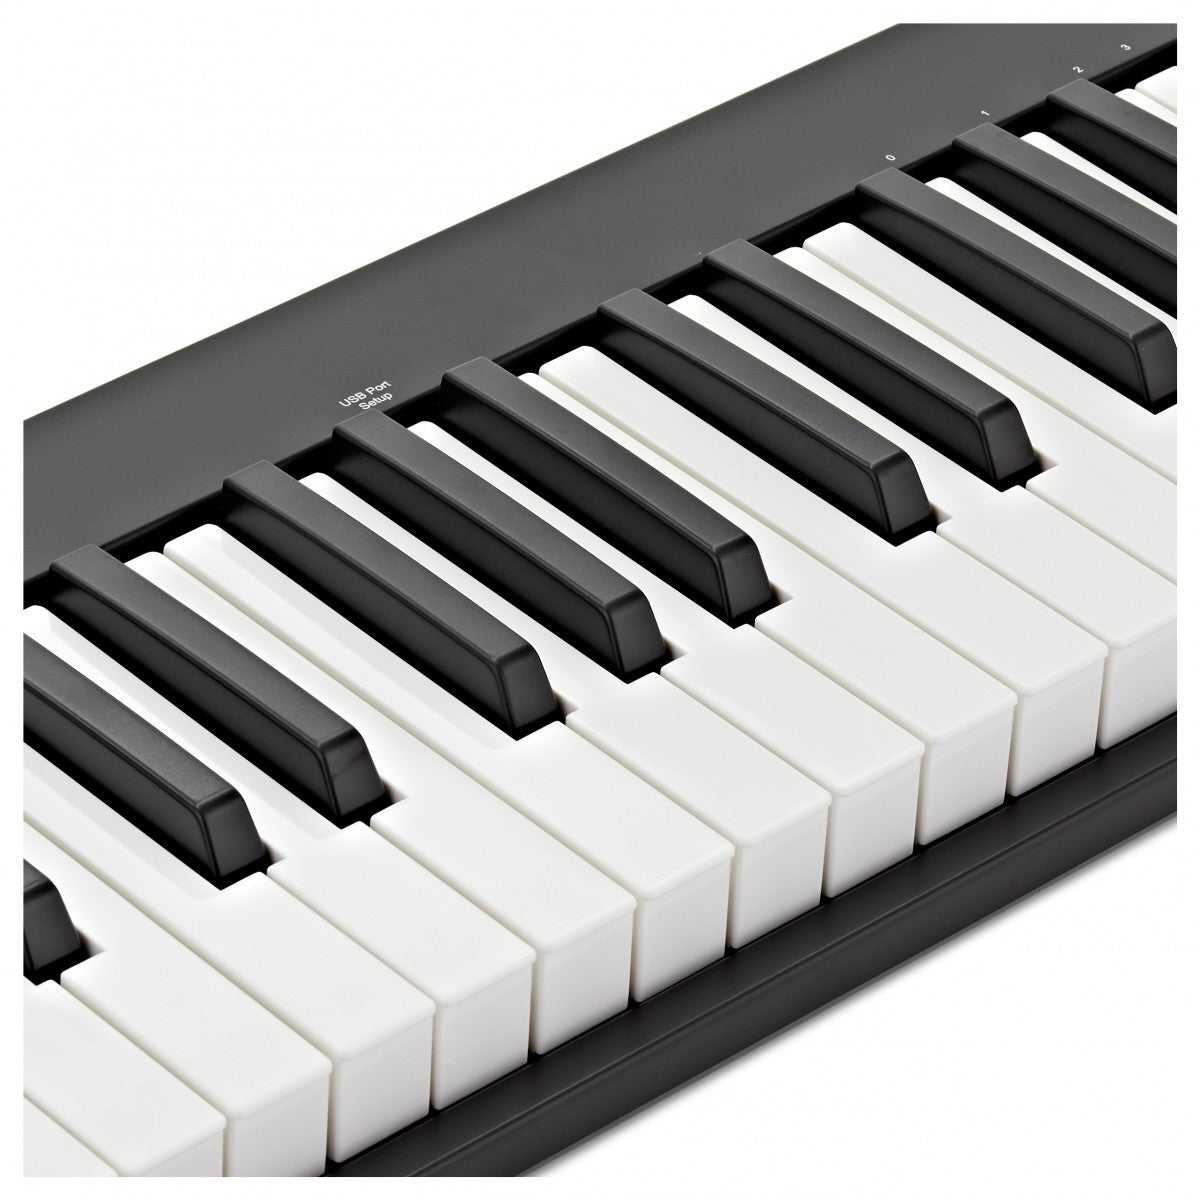 Midi Keyboard Controller Nektar Impact GX49